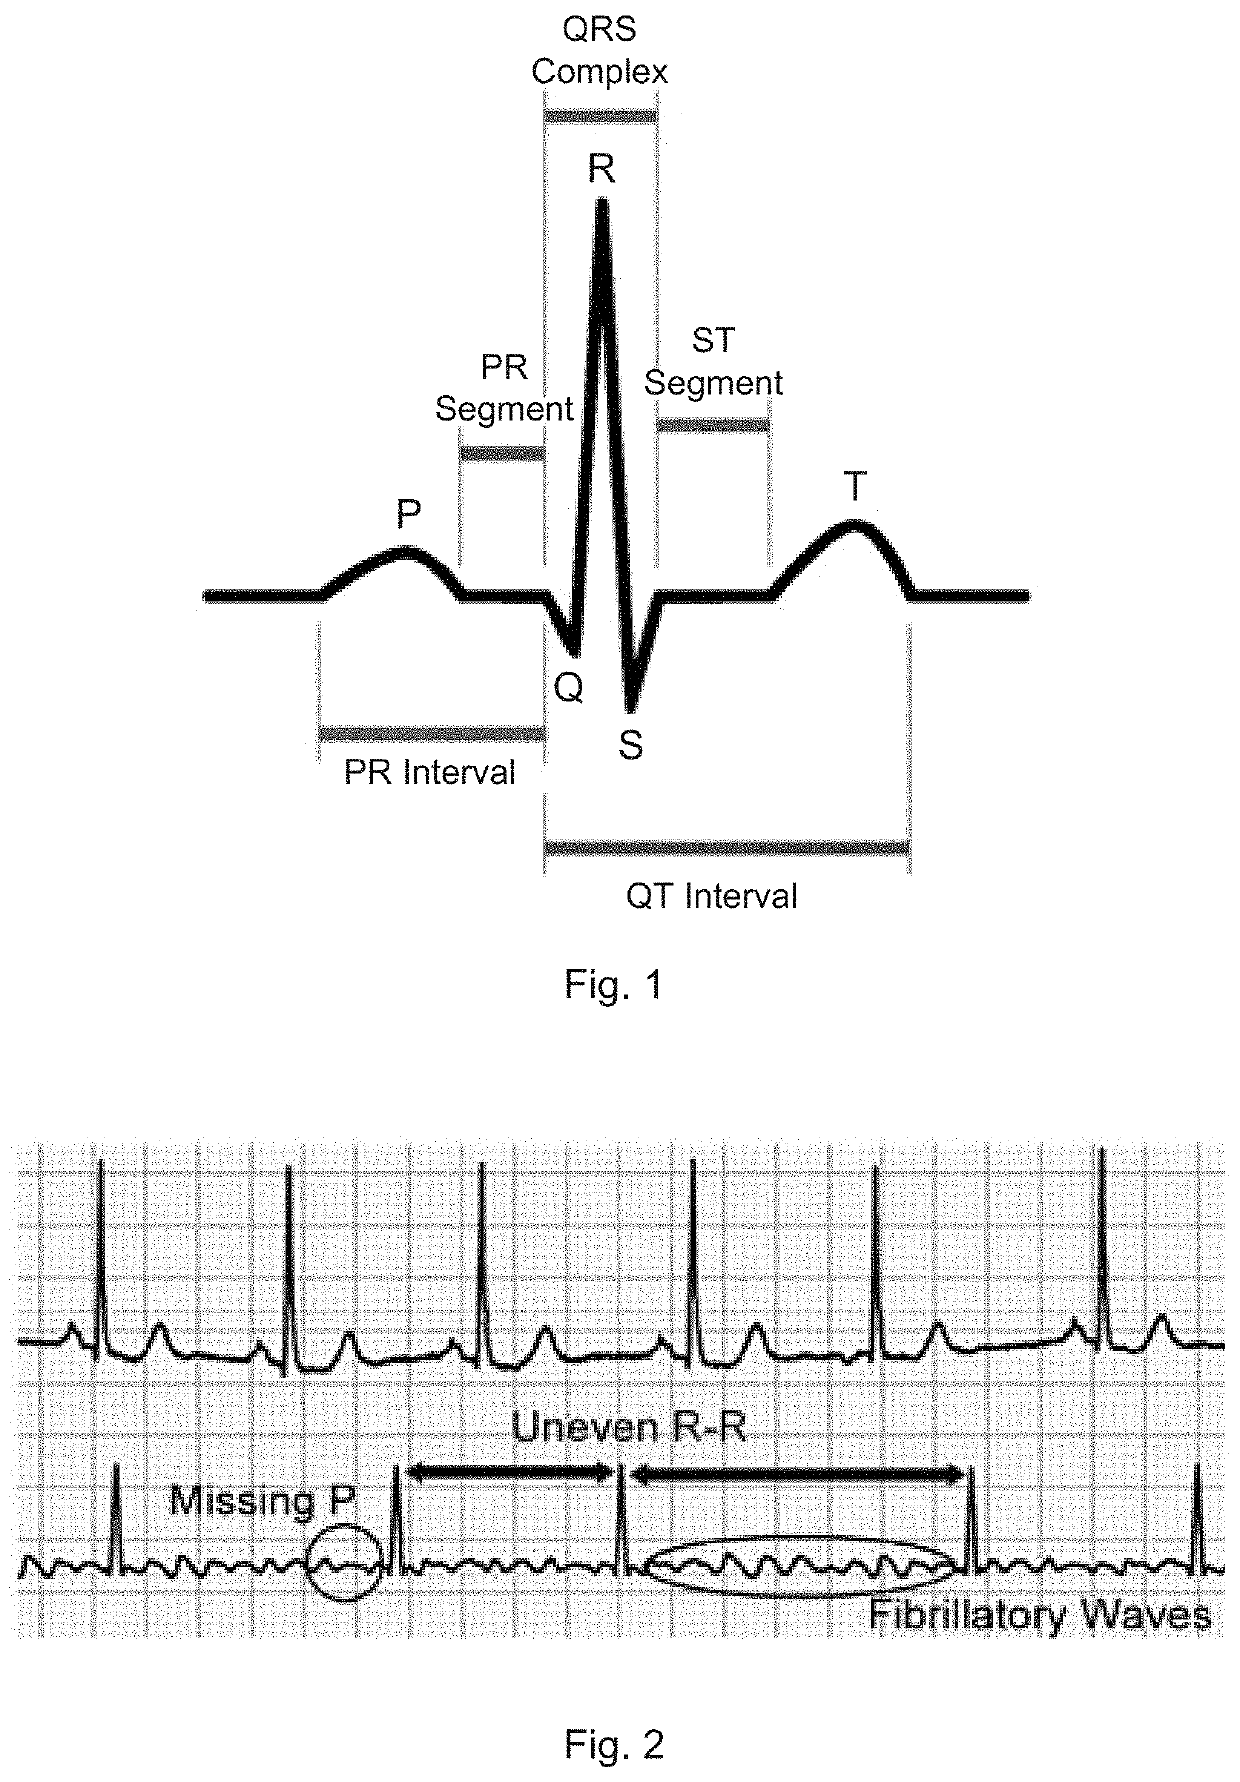 Method of detecting abnormalities in ECG signals